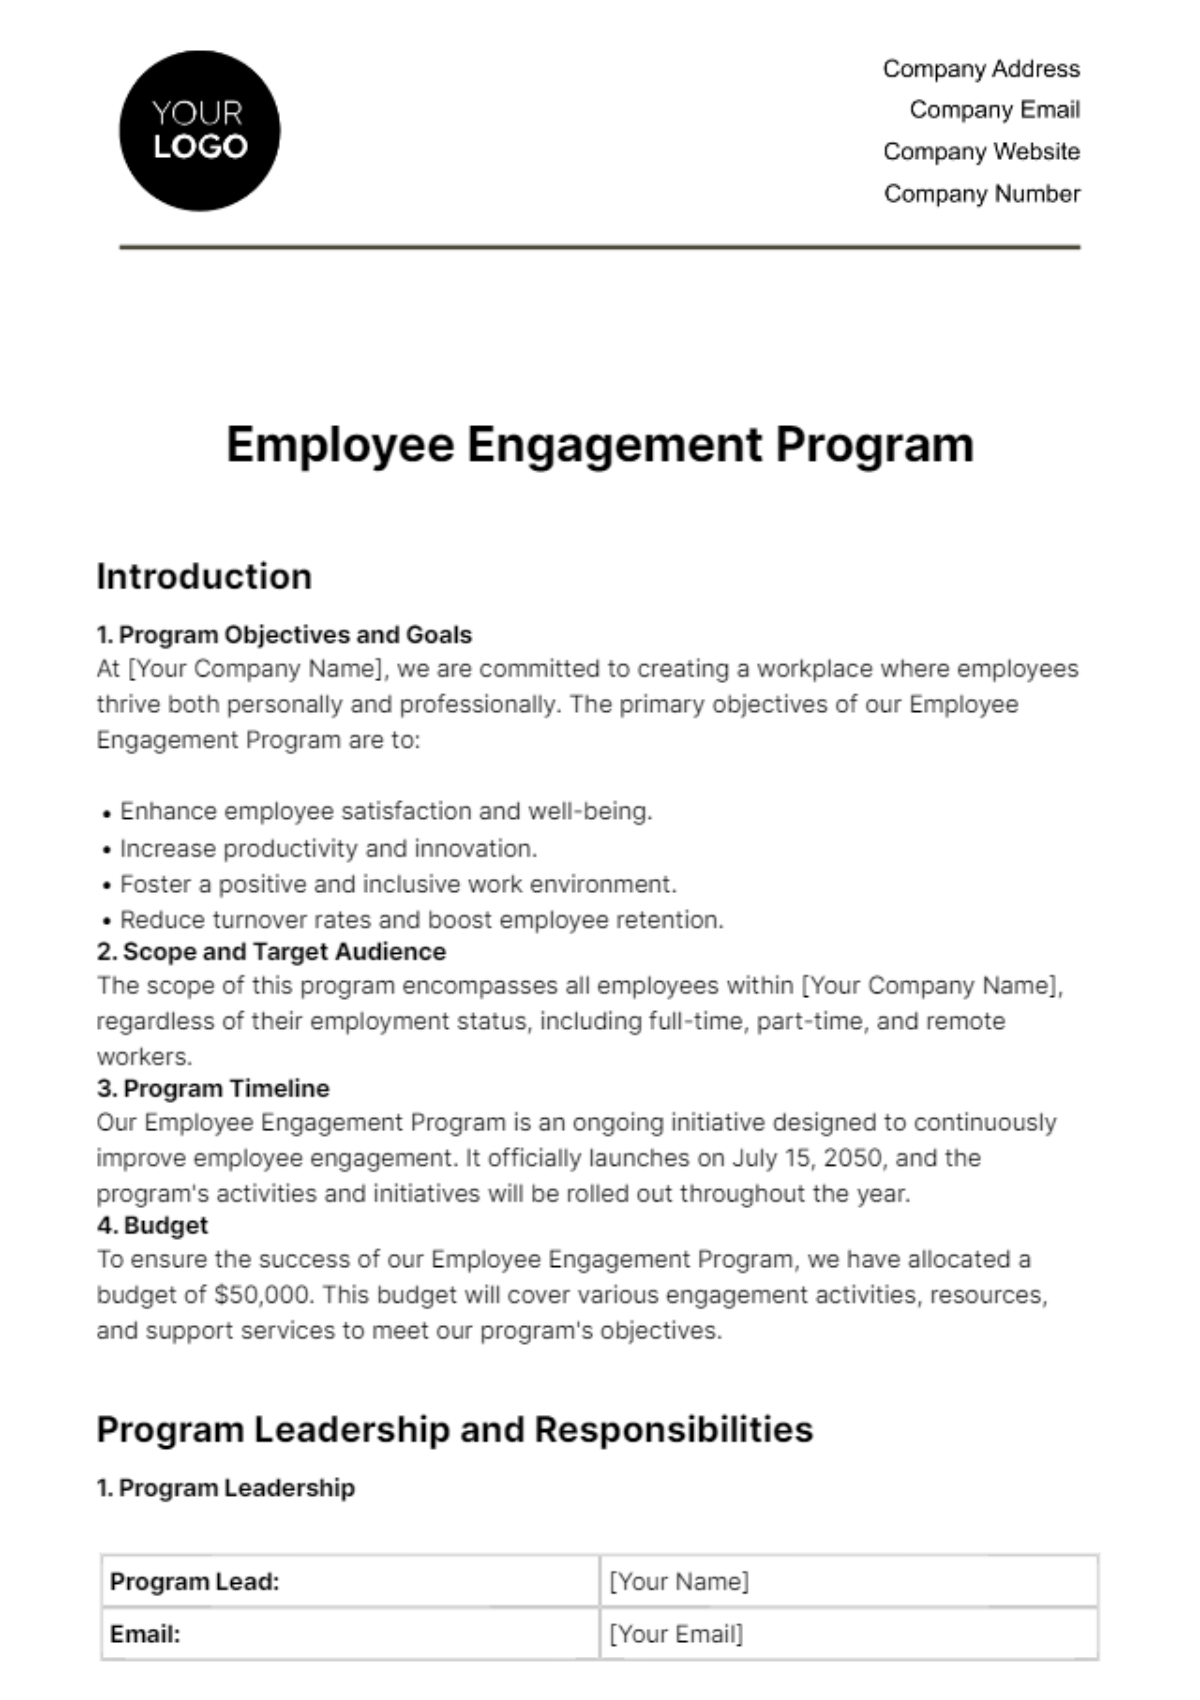 Free Employee Engagement Program HR Template